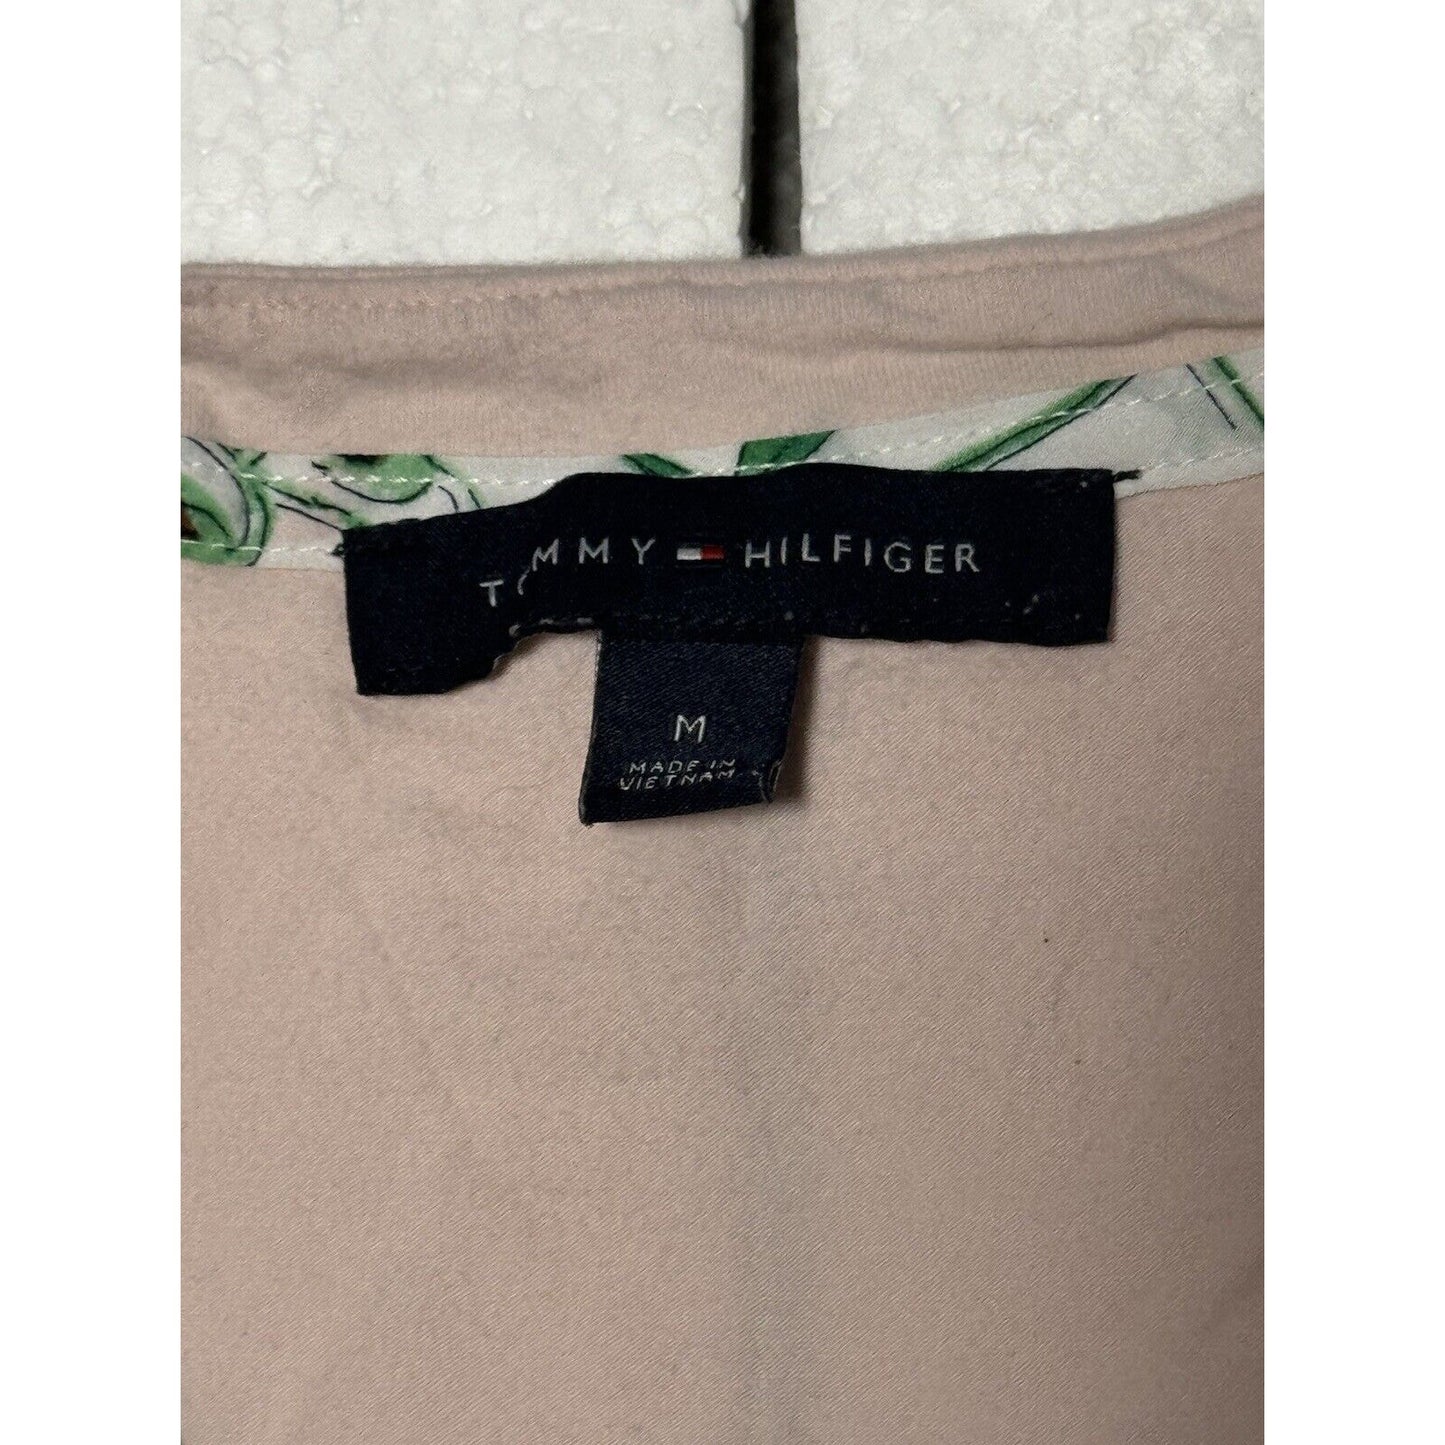 Tommy Hilfiger Floral-Print Tie-Front Top Size Medium